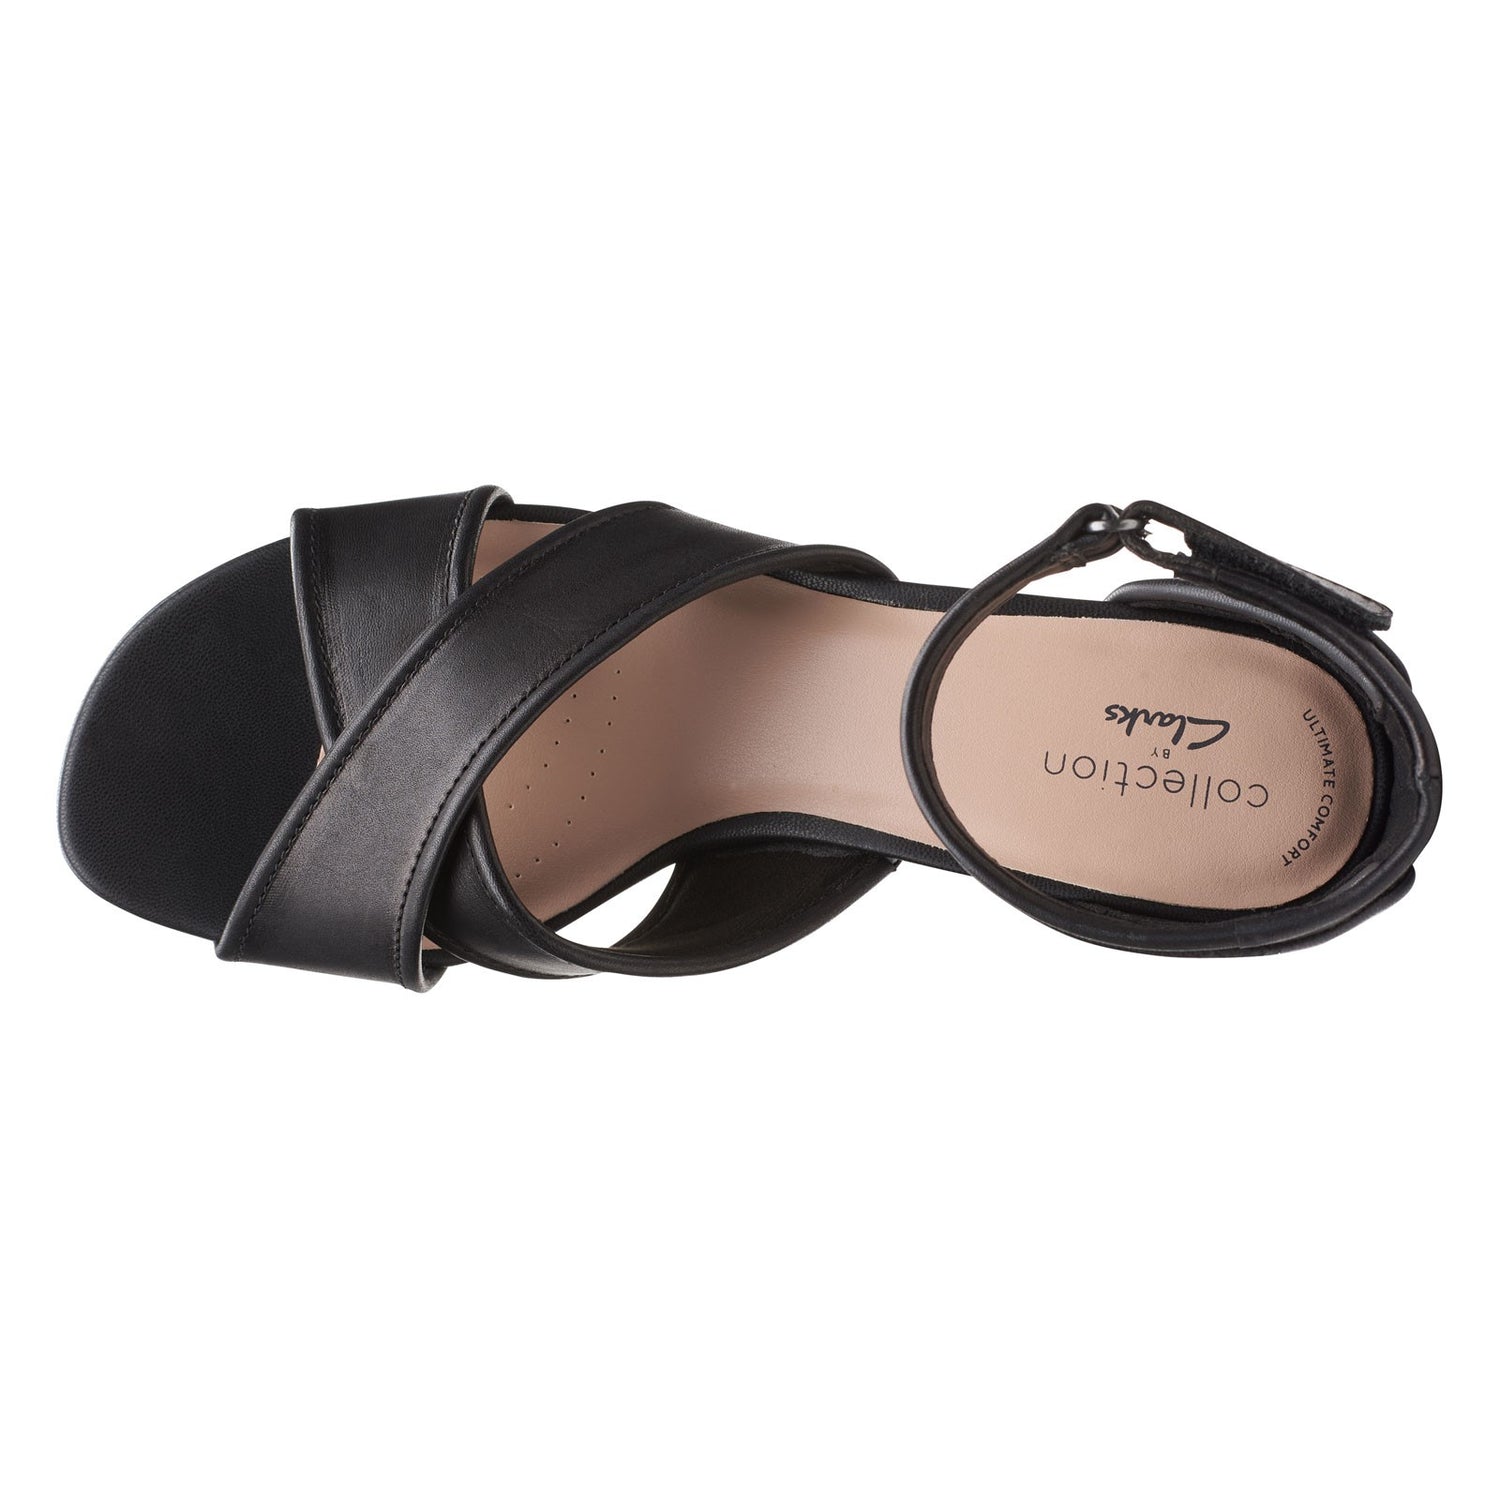 Peltz Shoes  Women's Clarks Caroleigh Rise Sandal BLACK 26164861